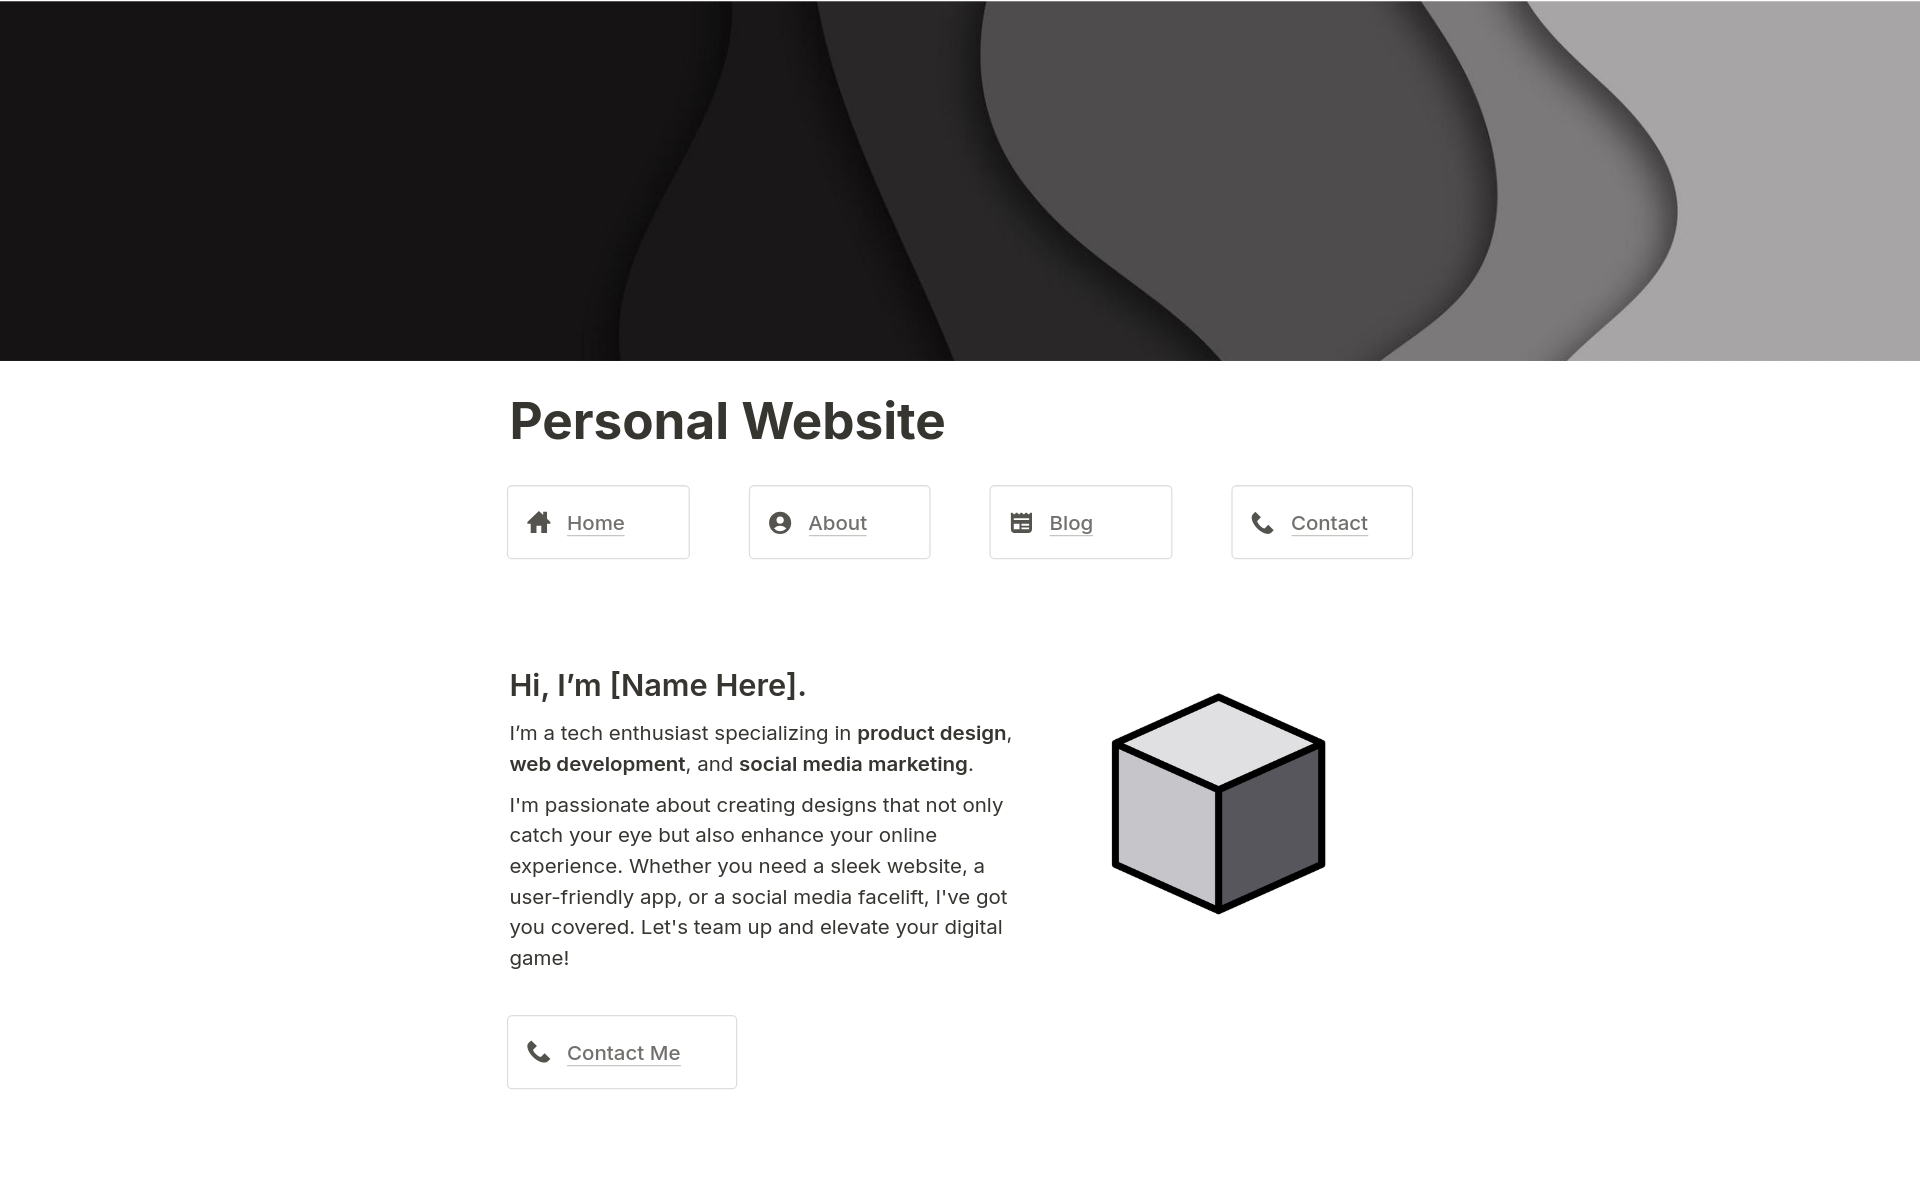 Aperçu du modèle de Personal Website